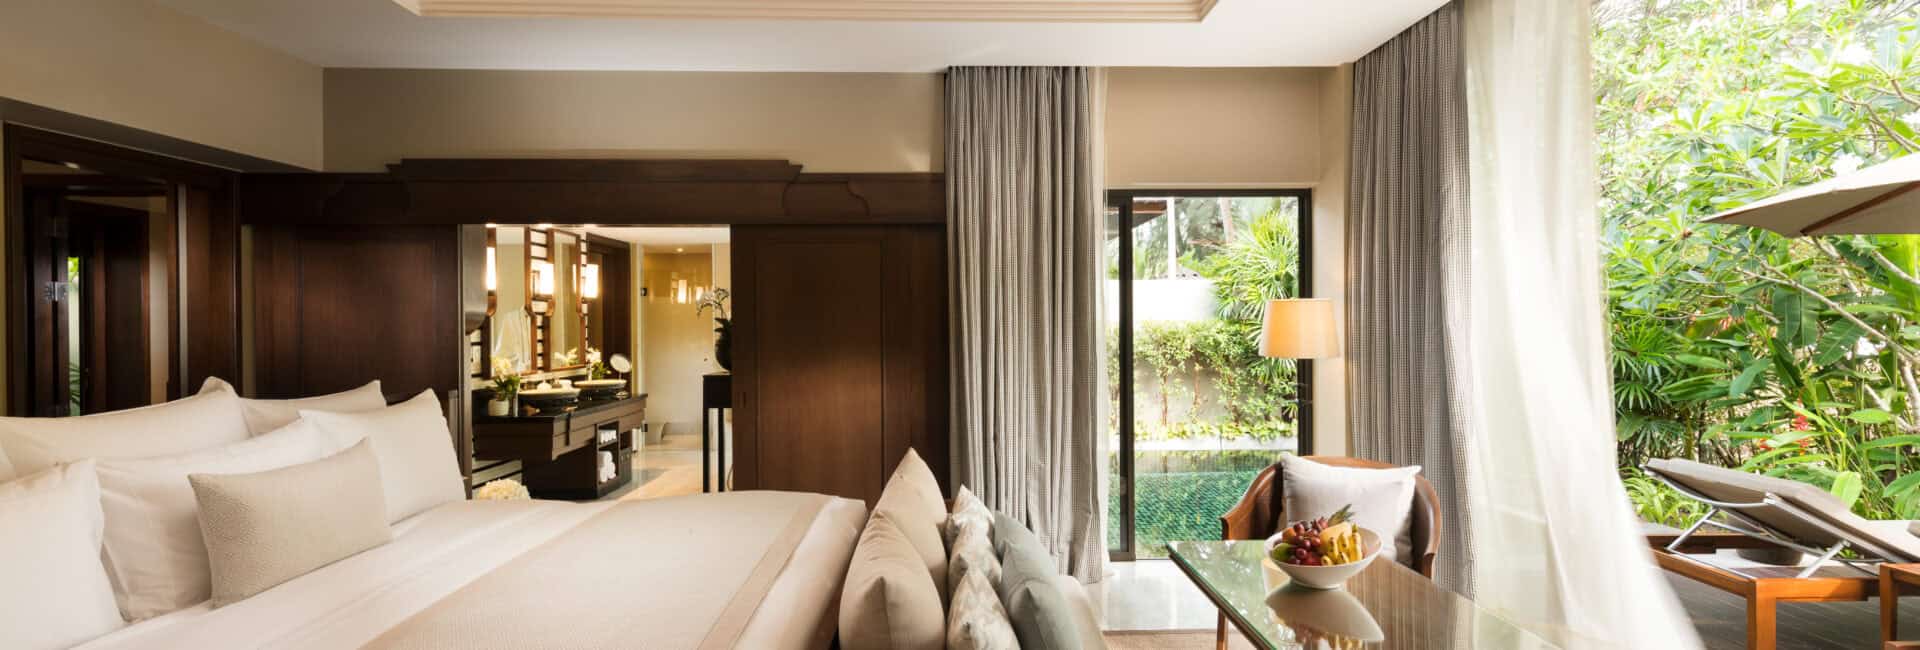 Anantara Layan Phuket Resort - Guest Room with Garden View